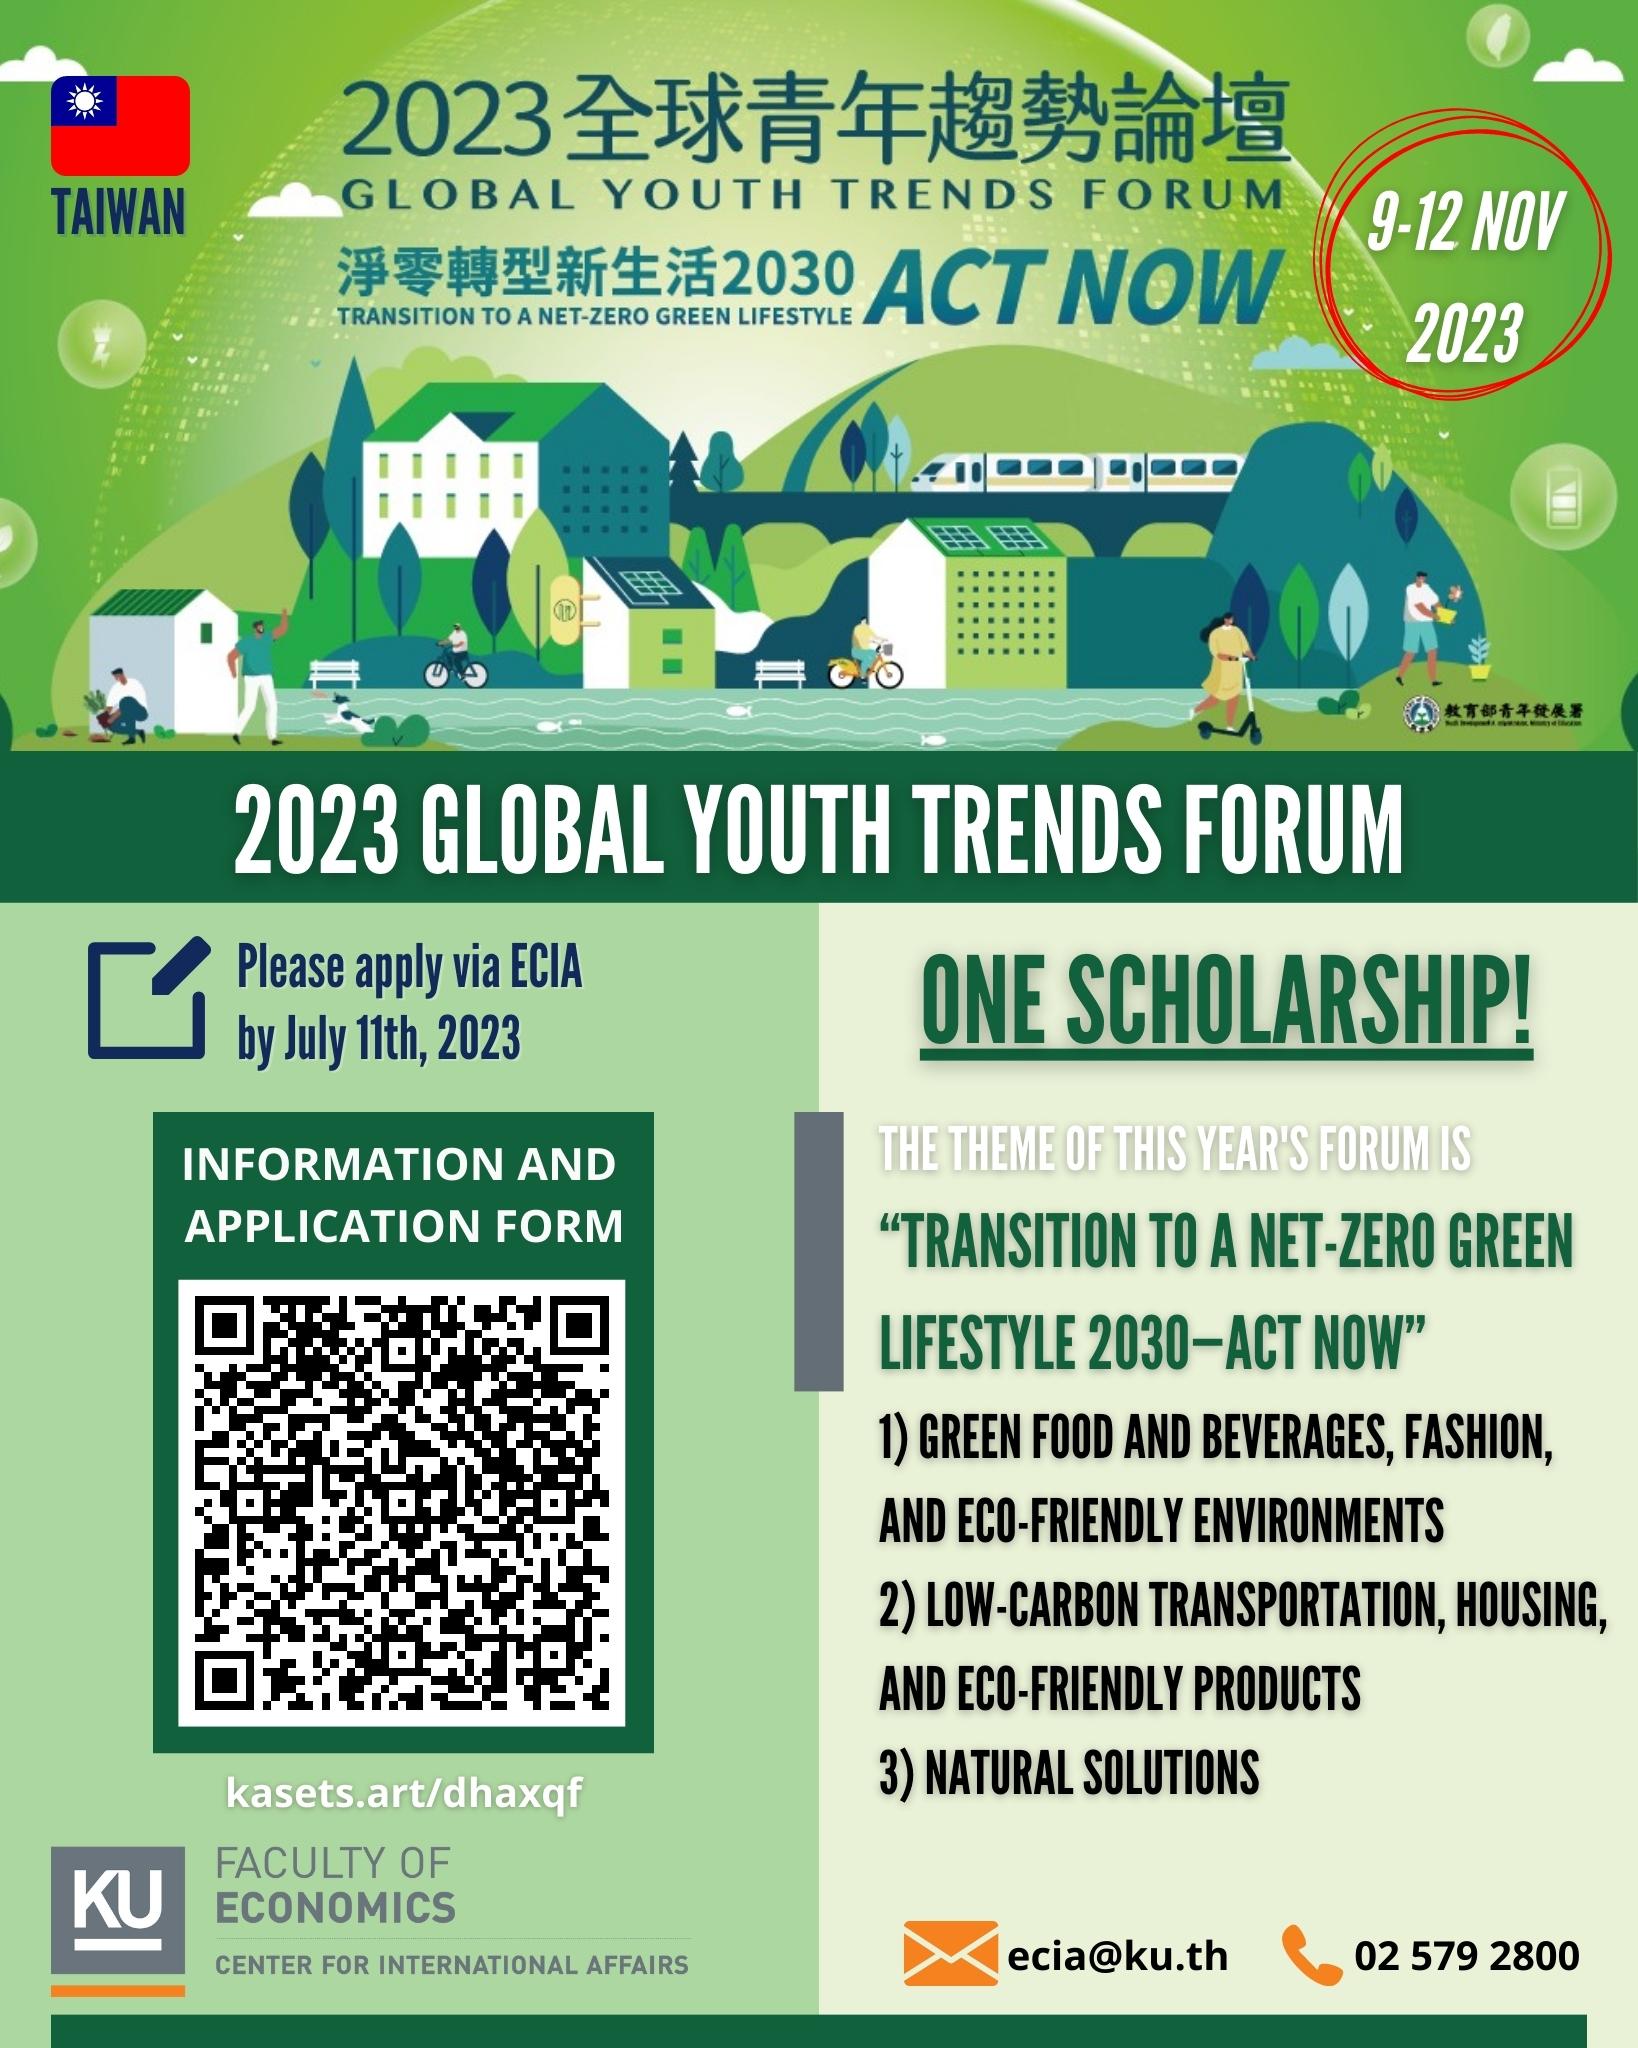 Global Youth Trends Forum in Taipei, Taiwan